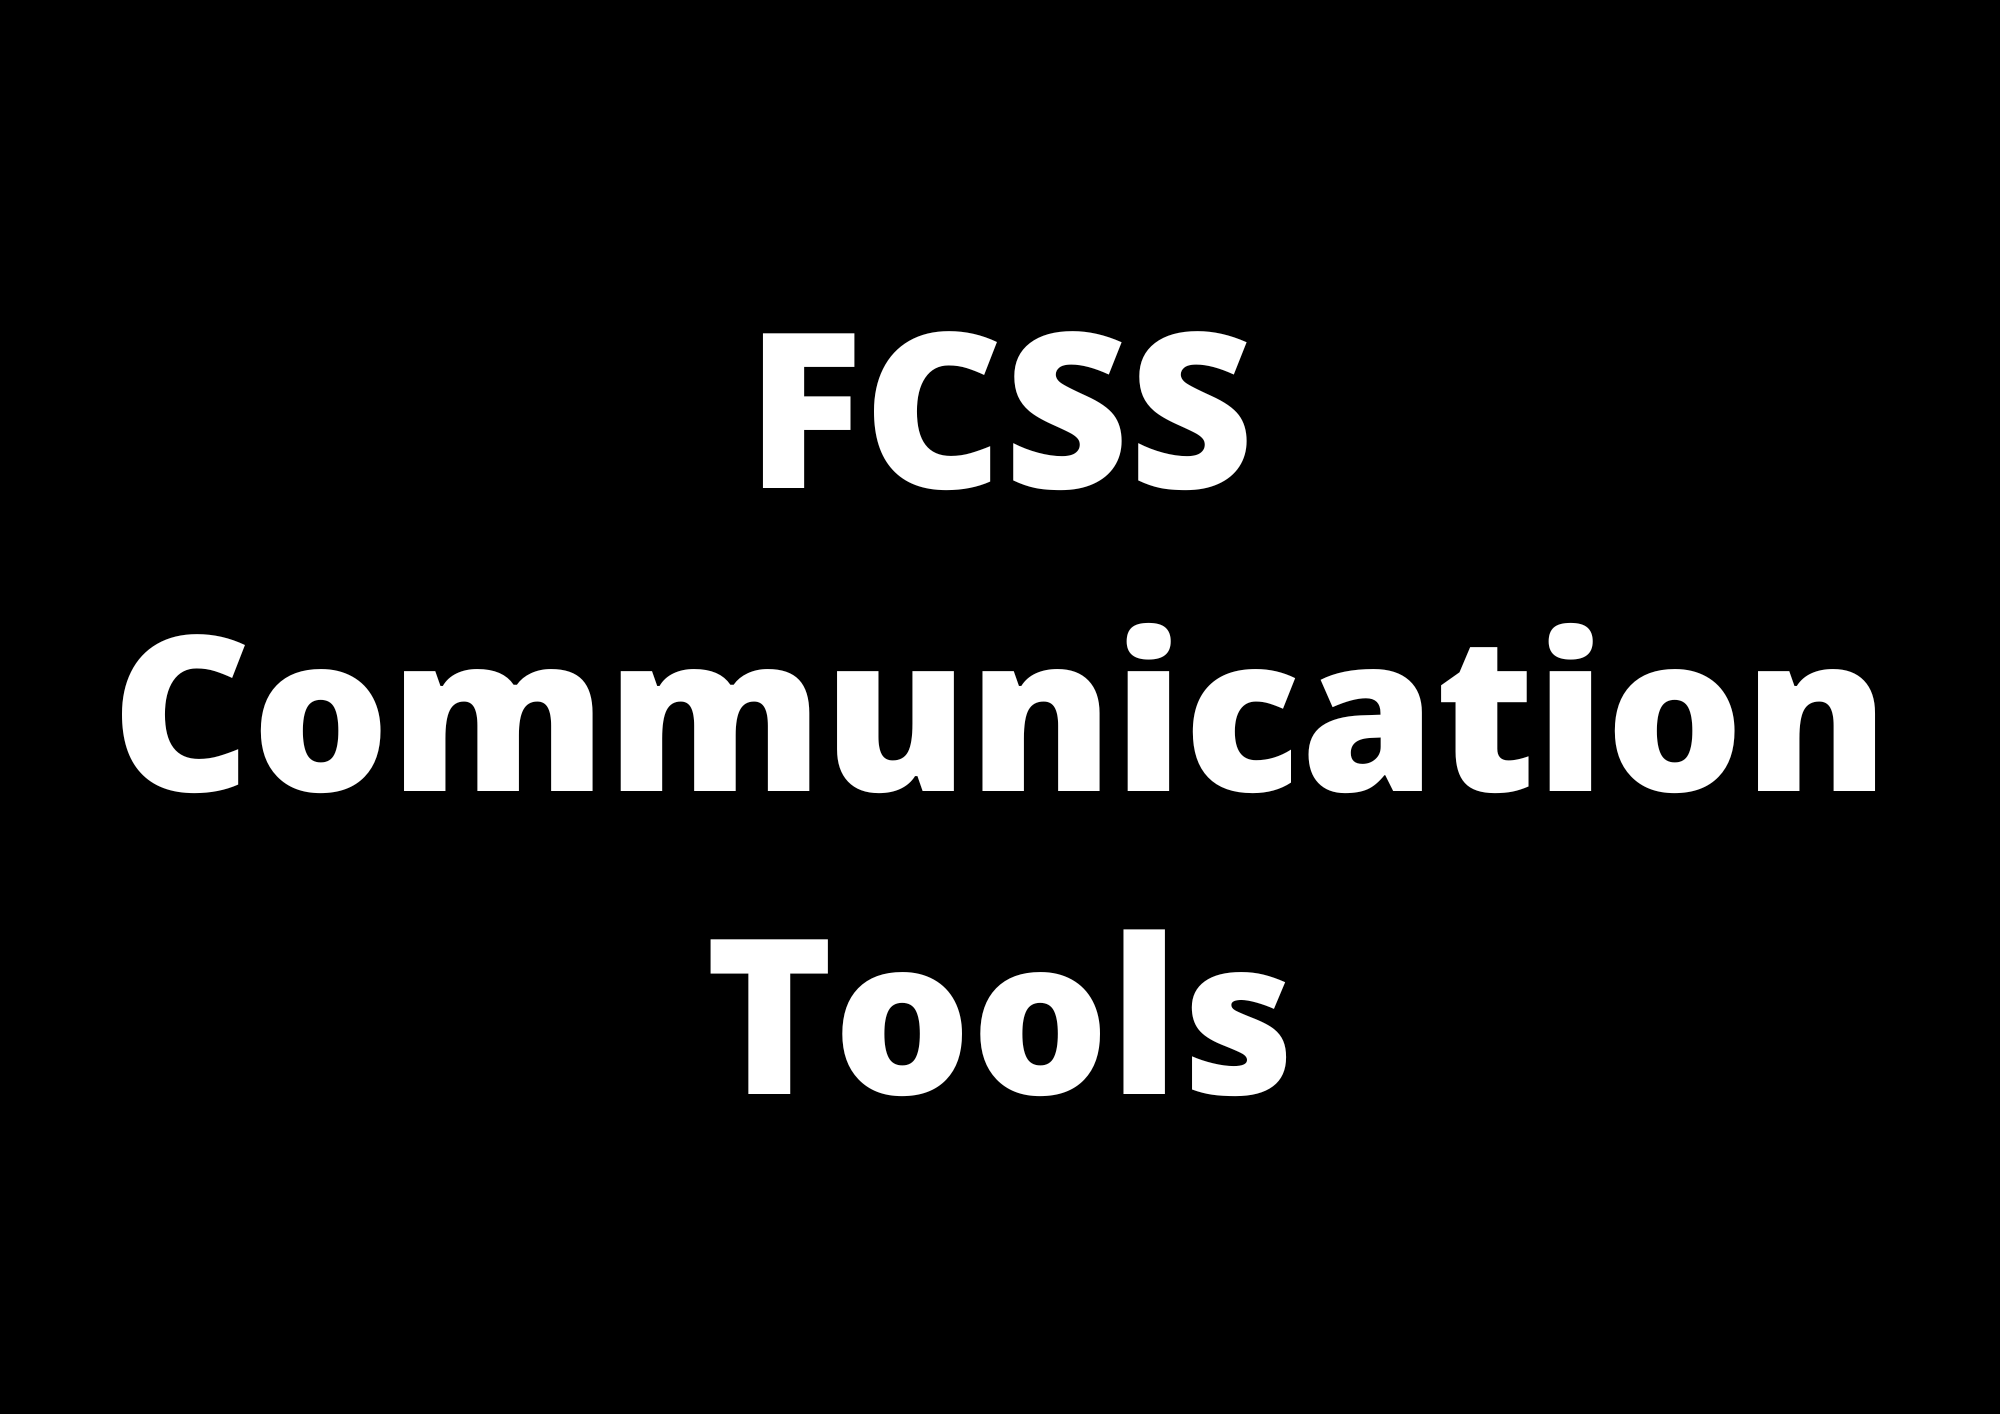 FCSS Communication Tools